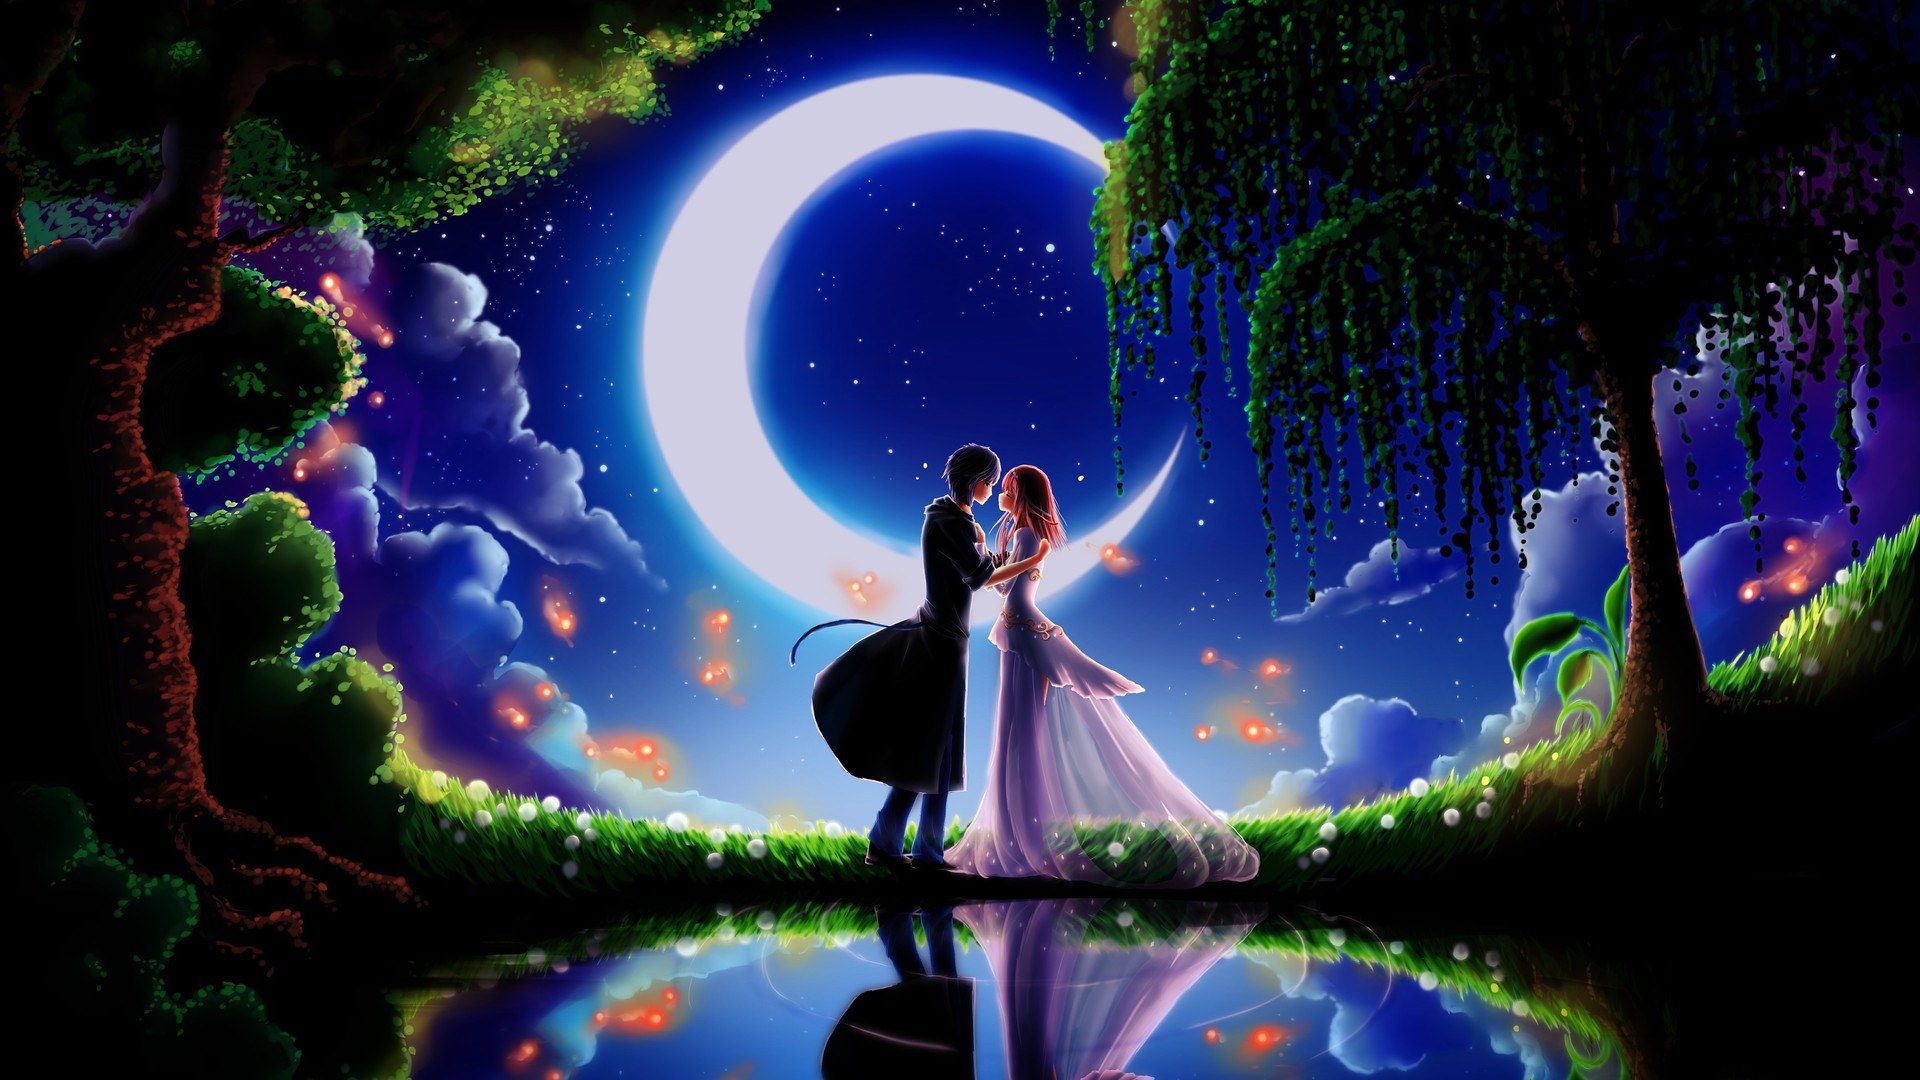 Beautiful and romantic love wallpaper download HD